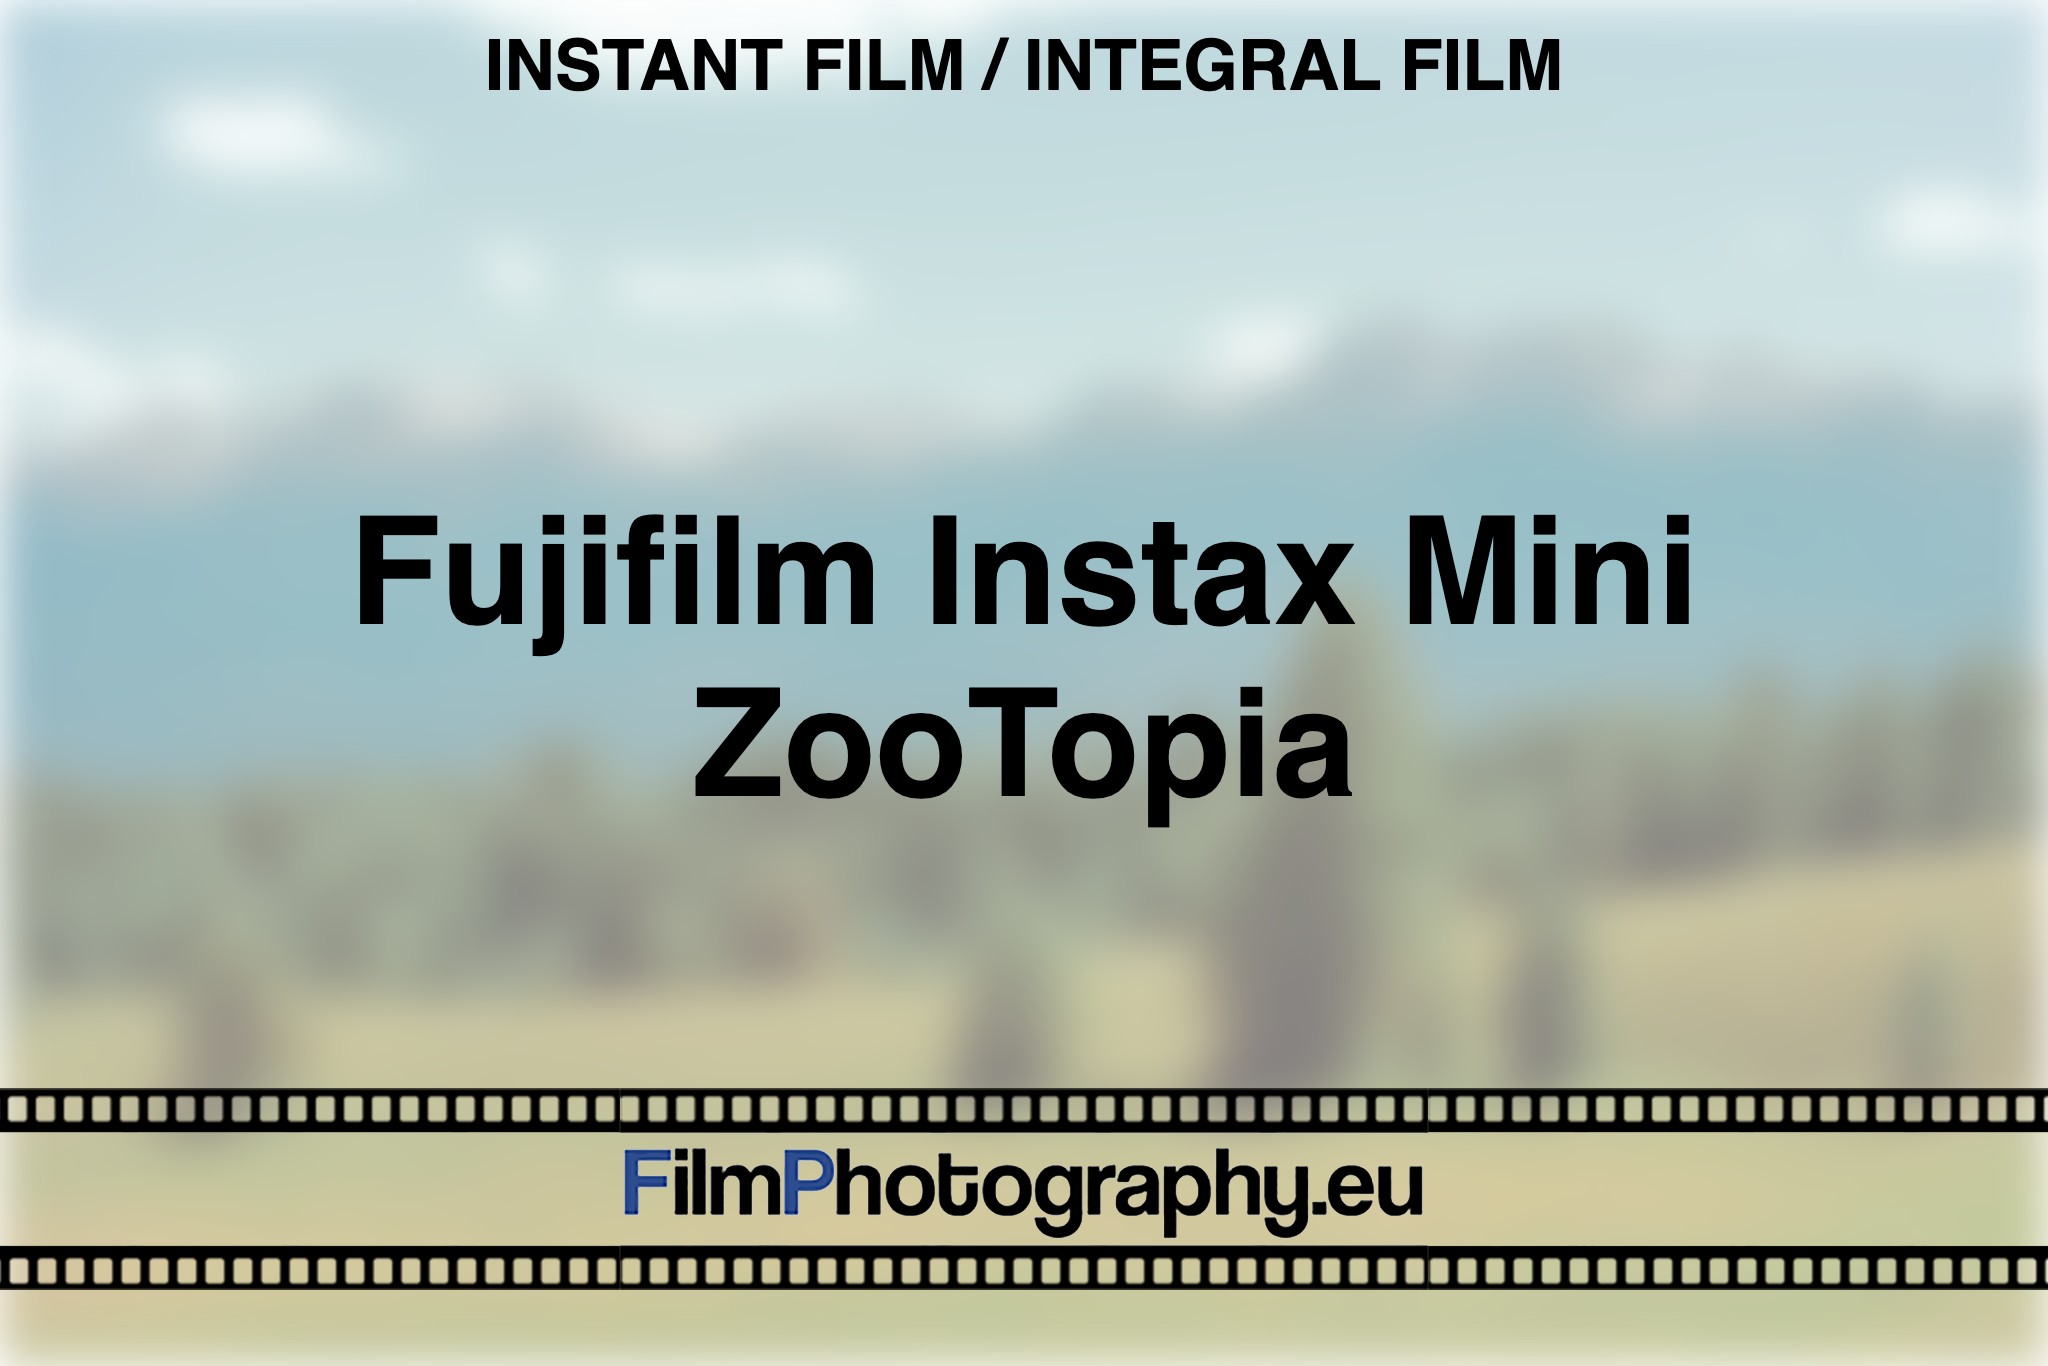 fujifilm-instax-mini-zootopia-instant-film-integral-film-bnv